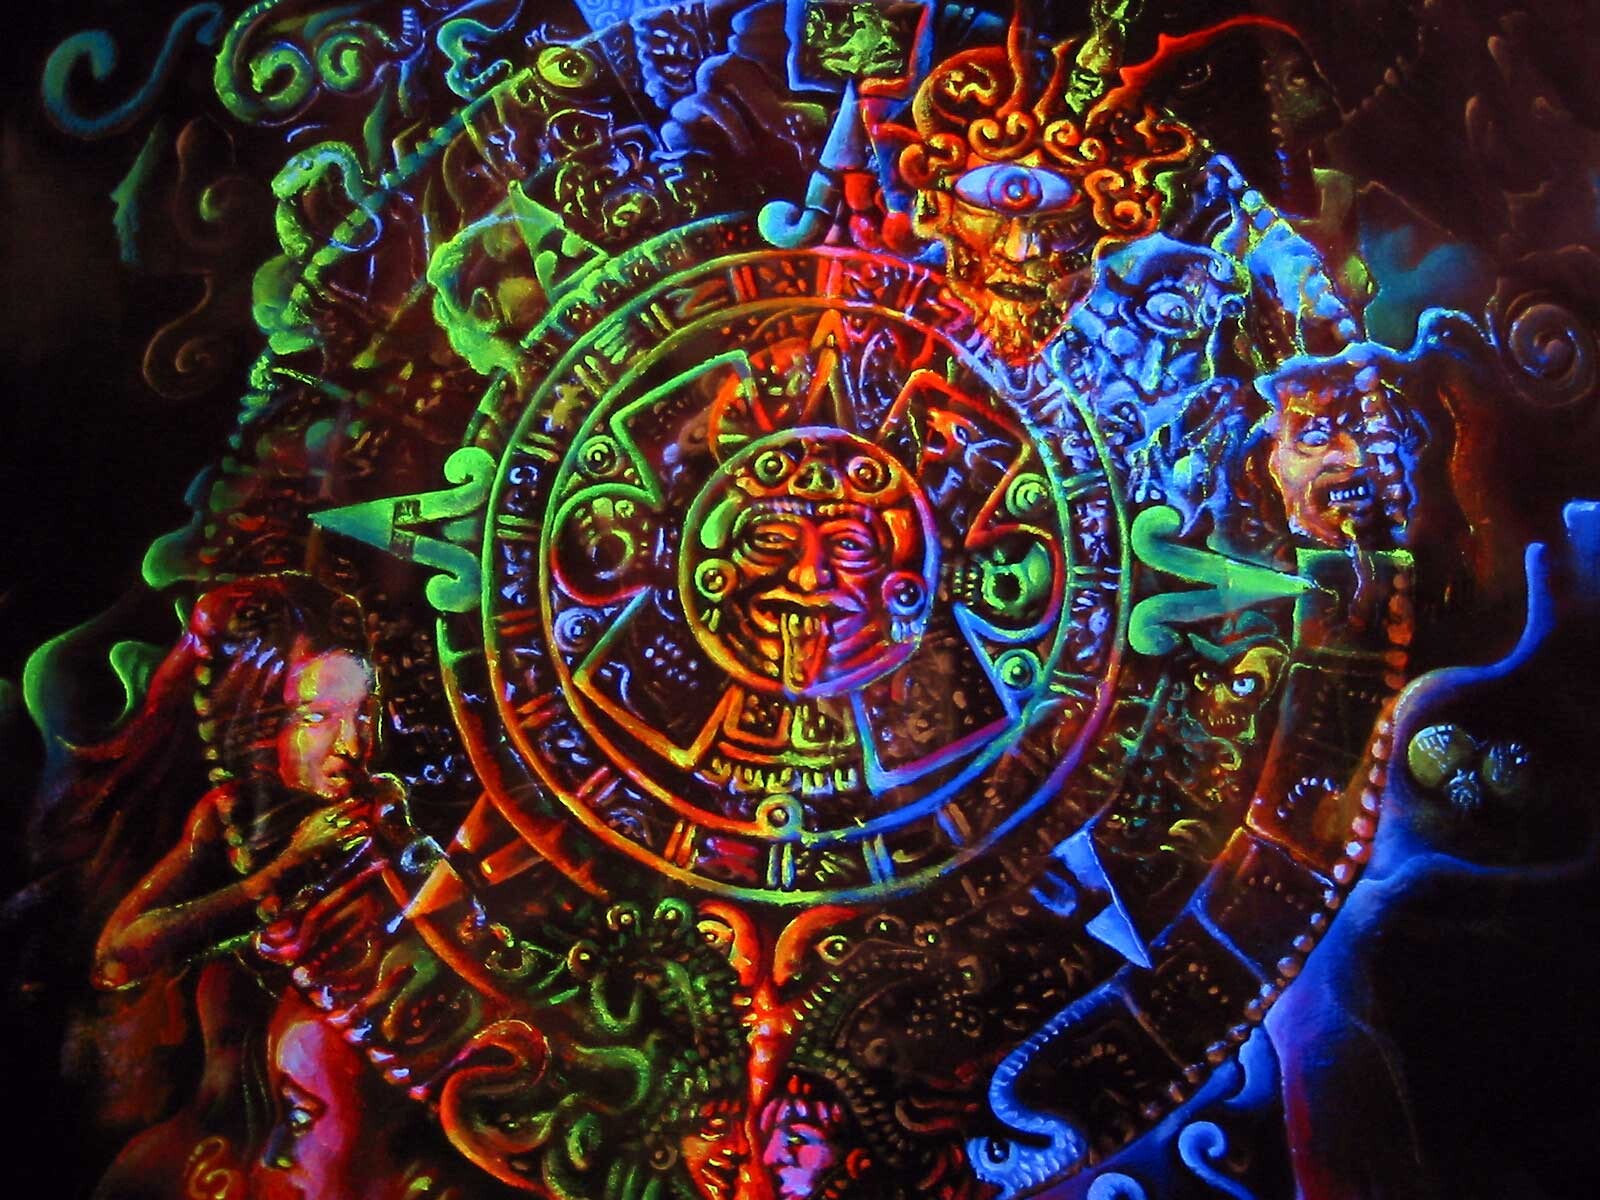 ArtStation - Psychedelic visionary black light